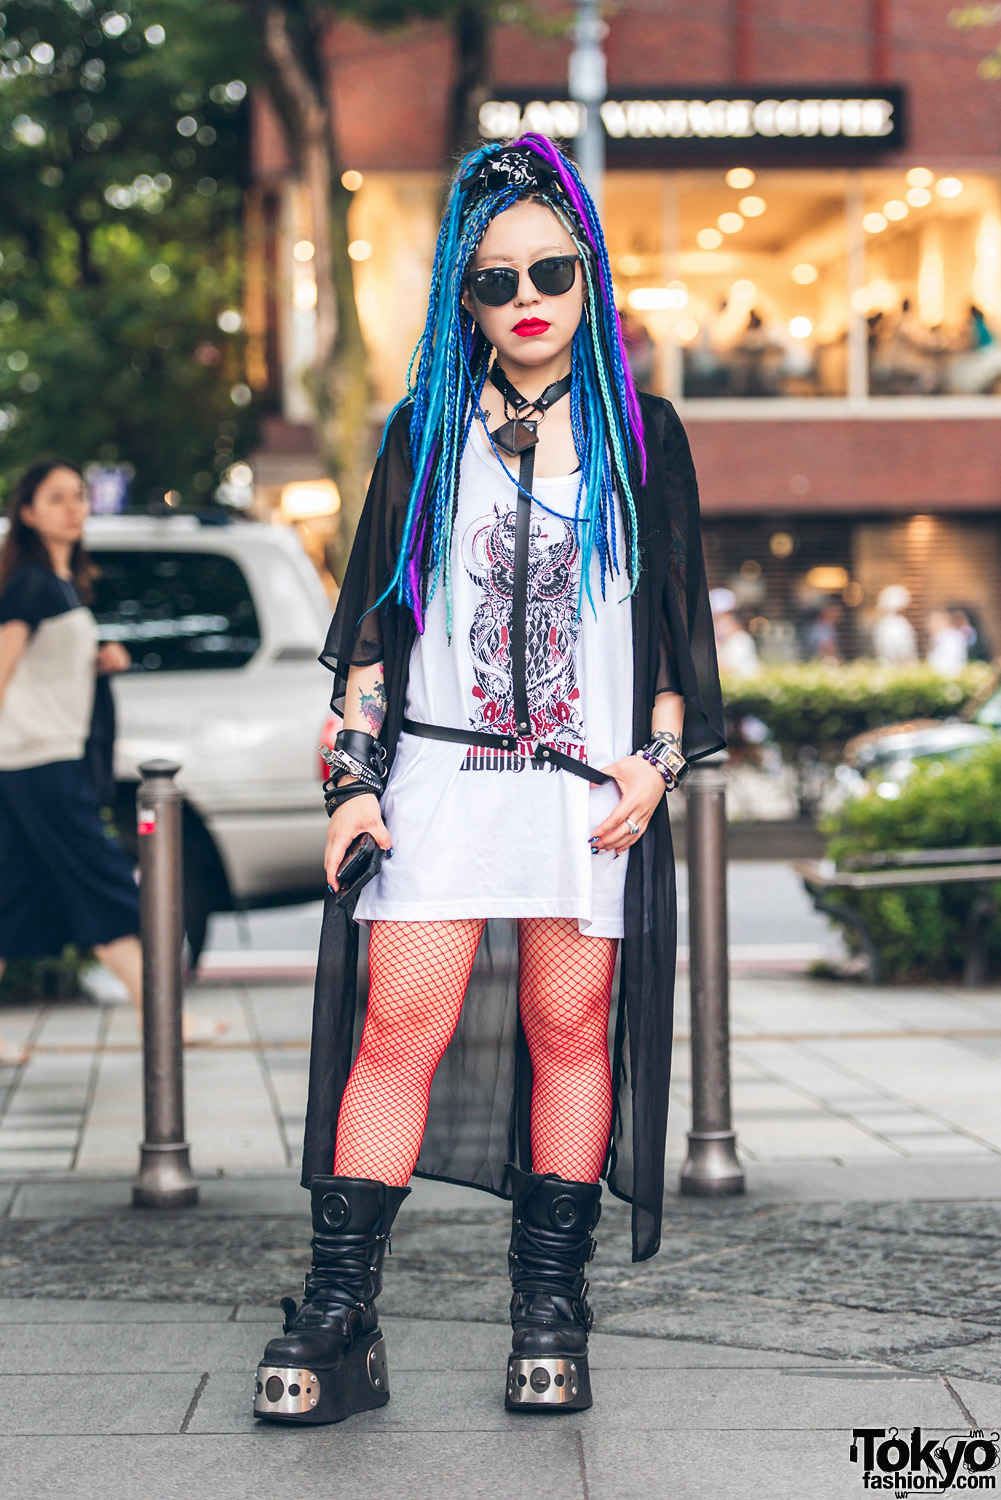 Harajuku Girl in Colorful Fashion w/ SoundWitch, New Rock, Prada, Vivienne Westwood, Fetis & Ray Ban